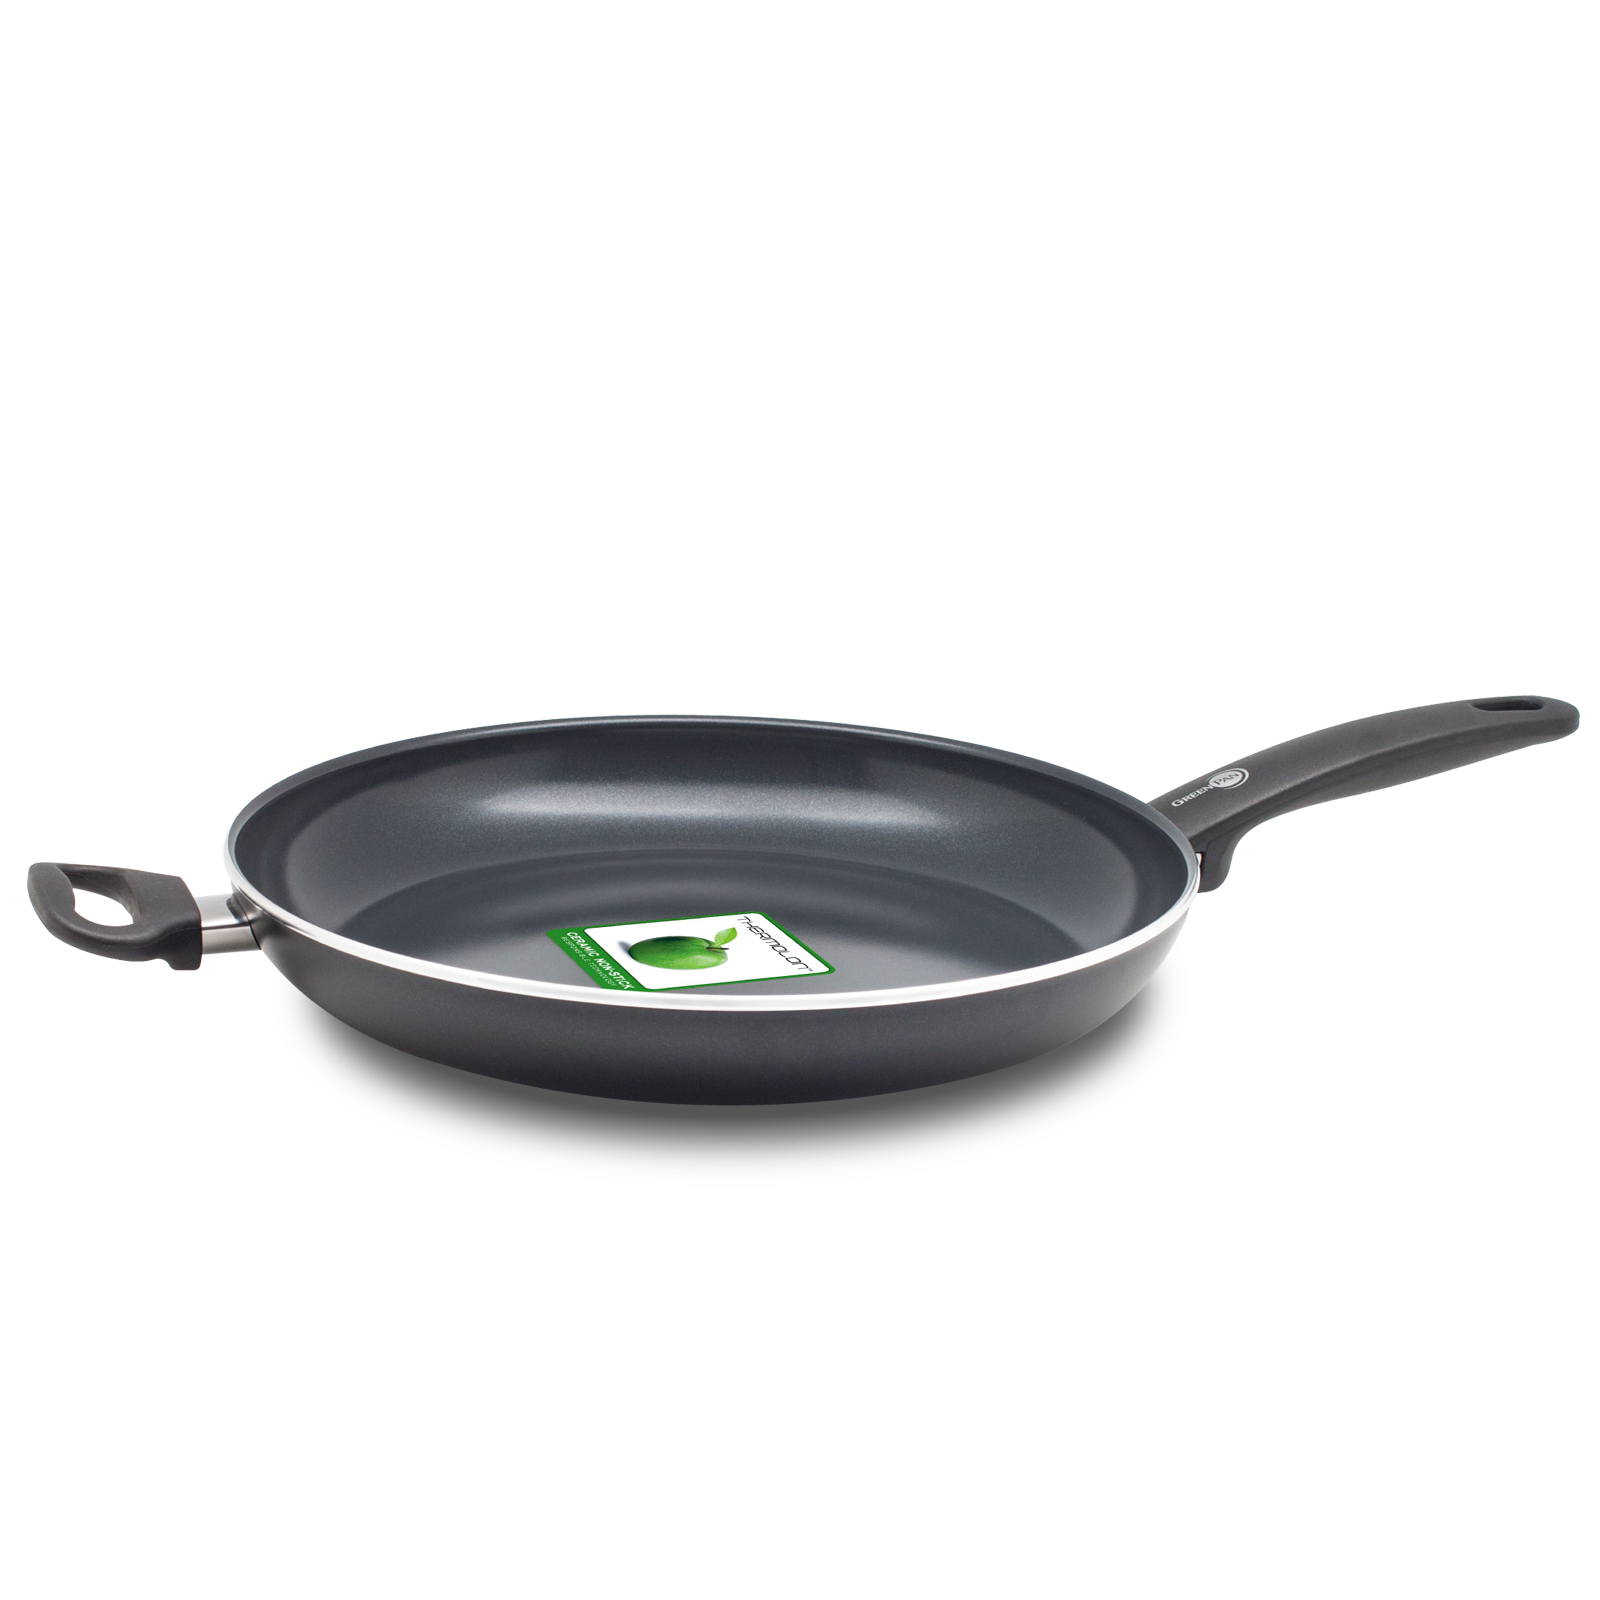 Cambridge Frying Pan with Helper Handle from Greenpan